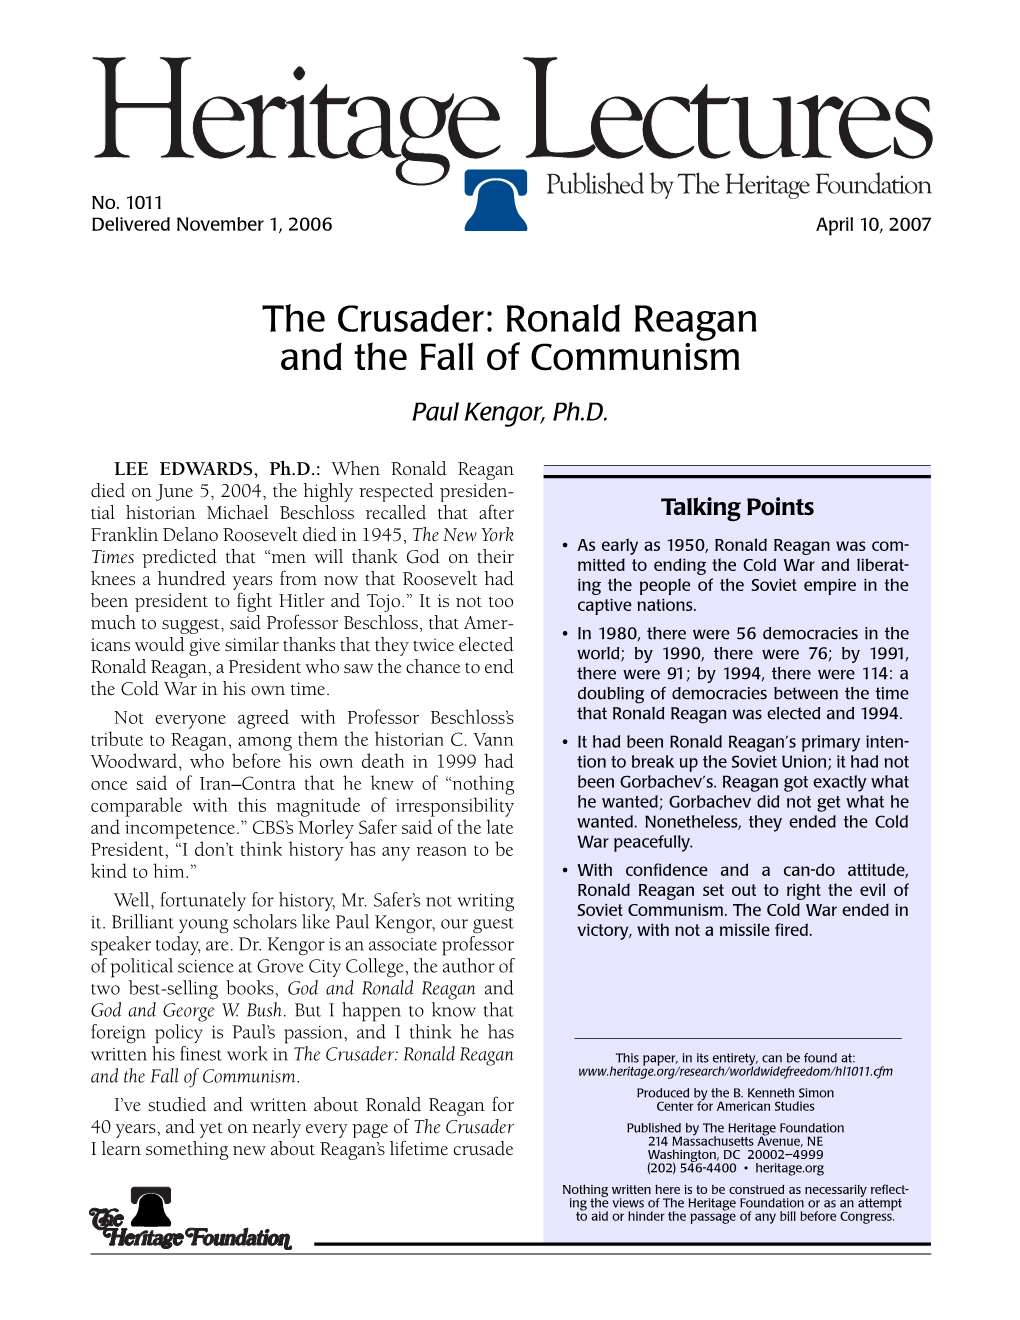 The Crusader: Ronald Reagan and the Fall of Communism Paul Kengor, Ph.D